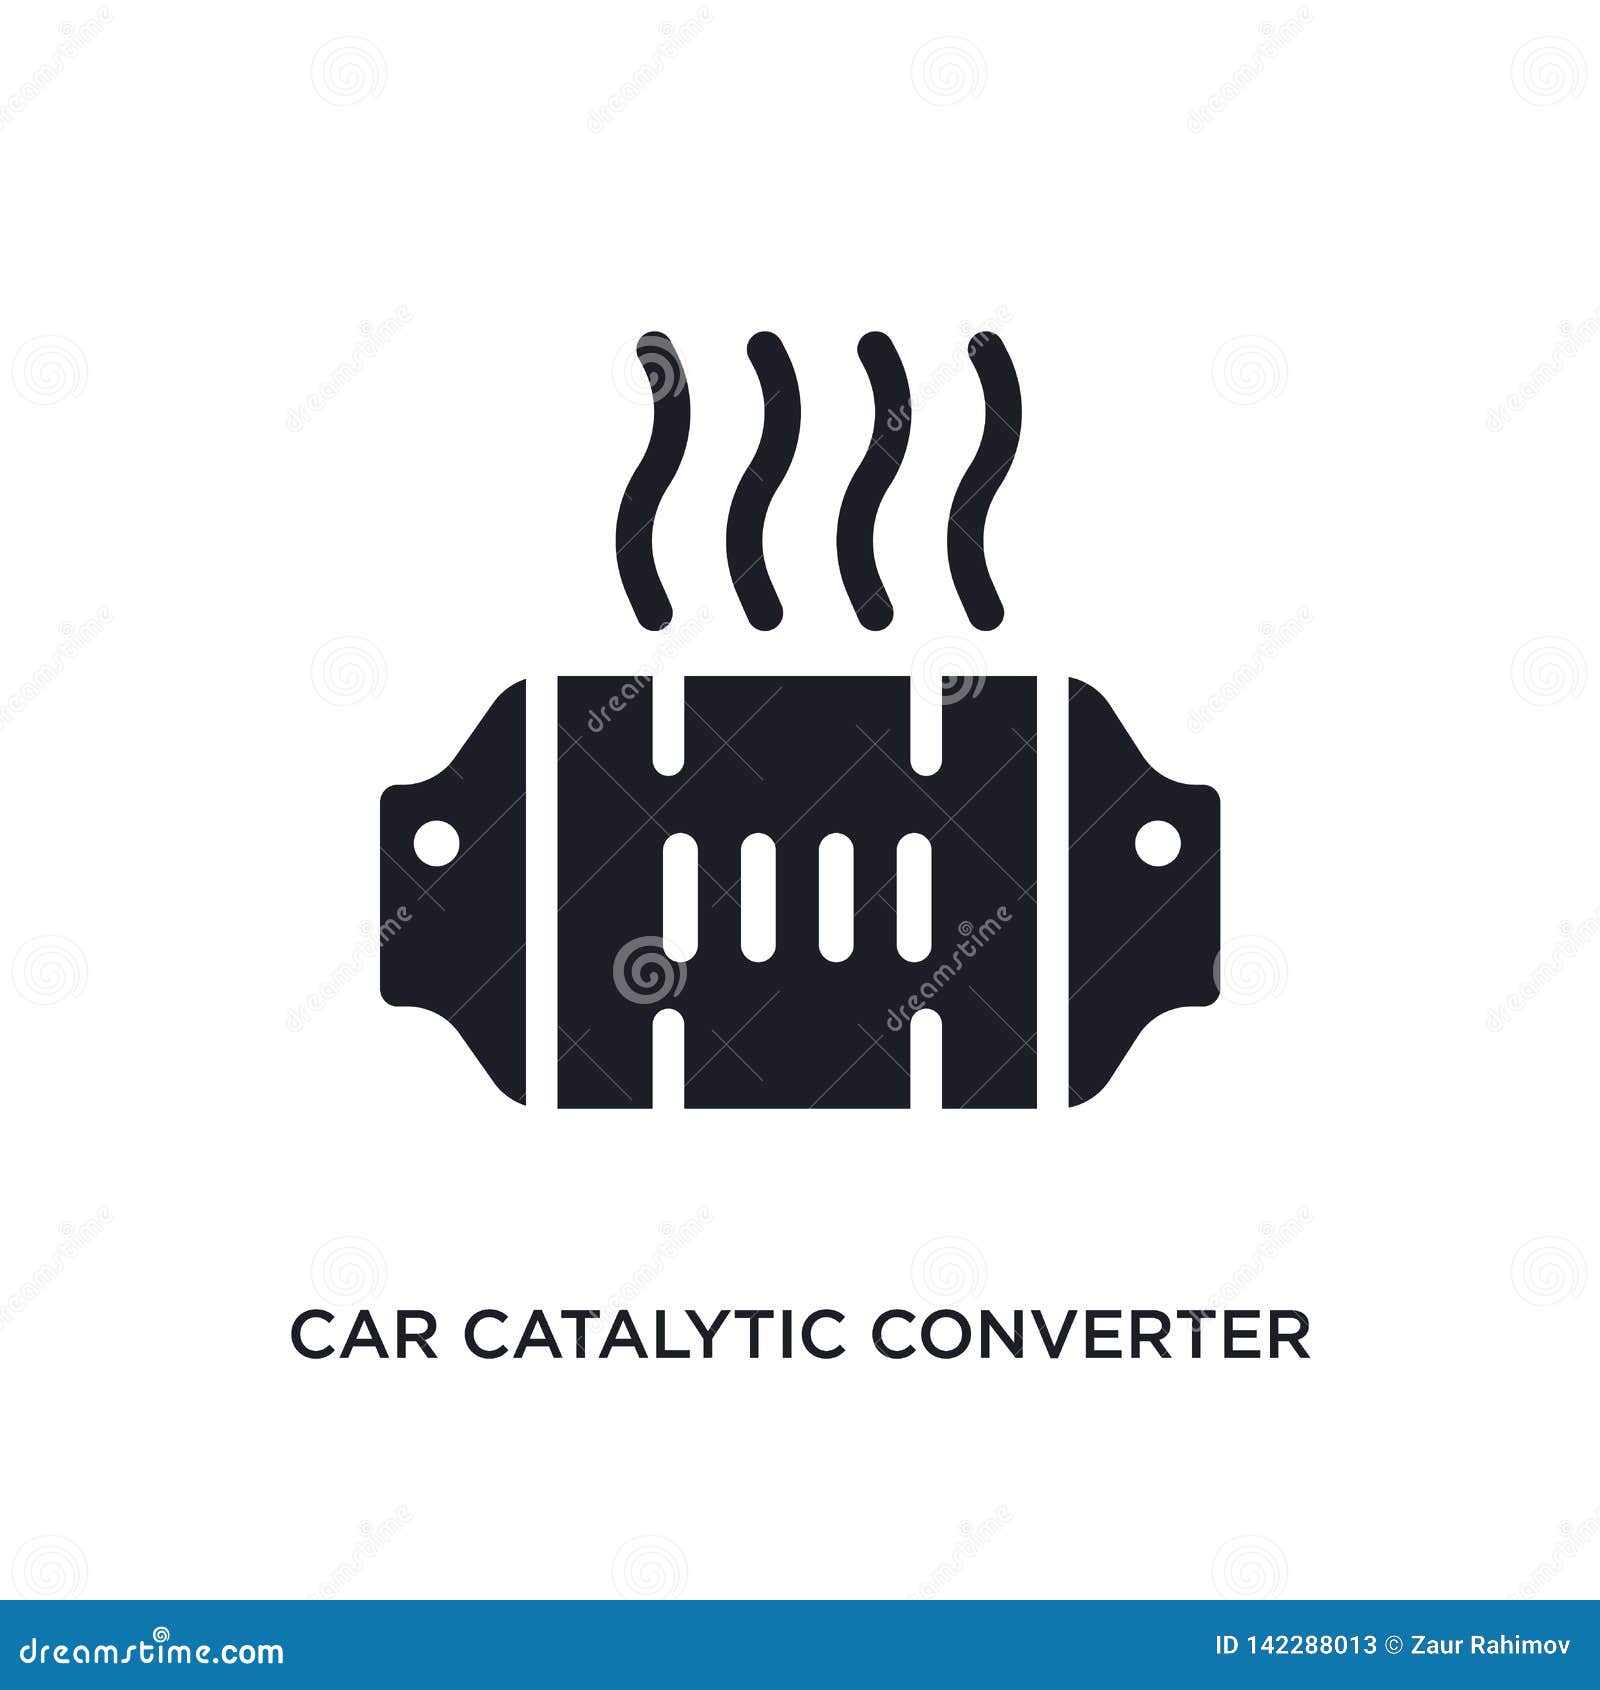 Car Catalytic Converter Icon From Car Parts Collection. Cartoon Vector